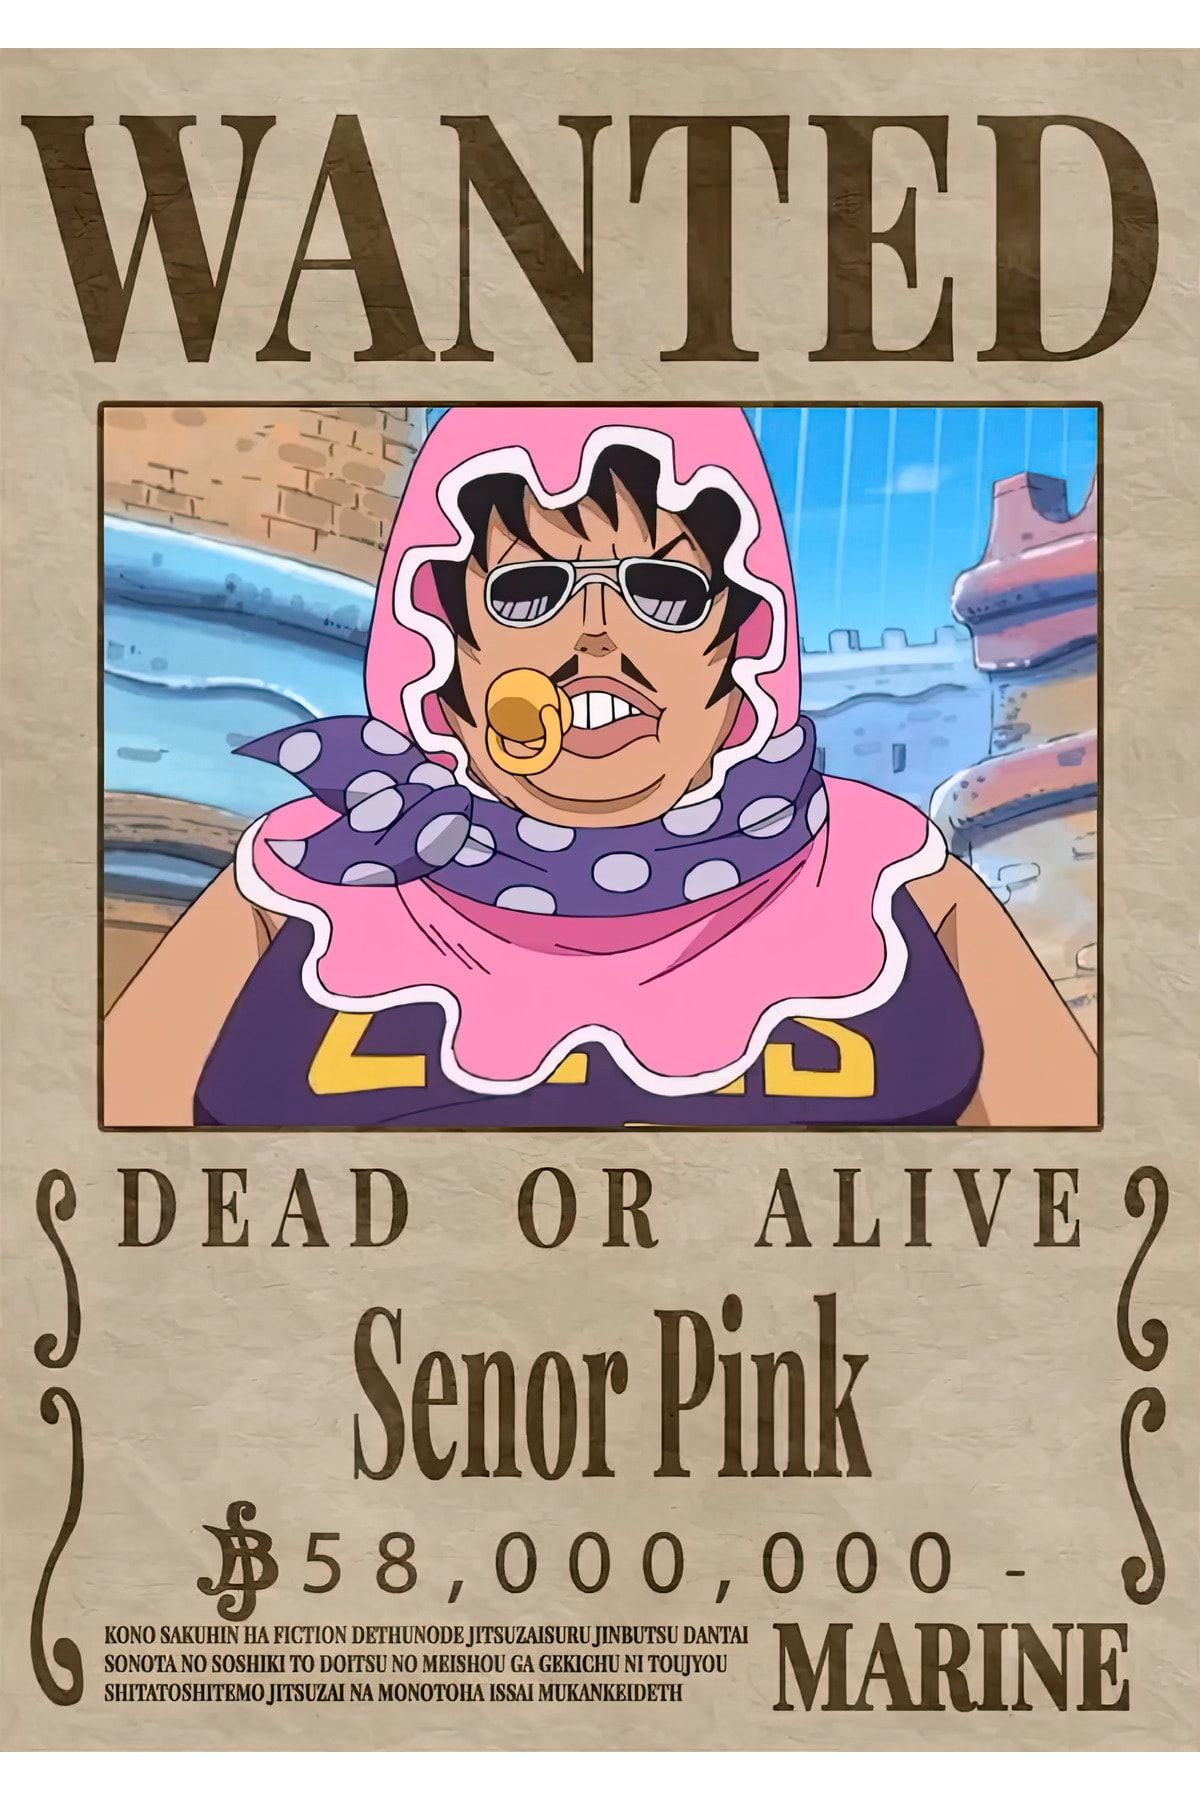 uzuntuning One Piece Senor Pink Wanted Aranıyor Posteri